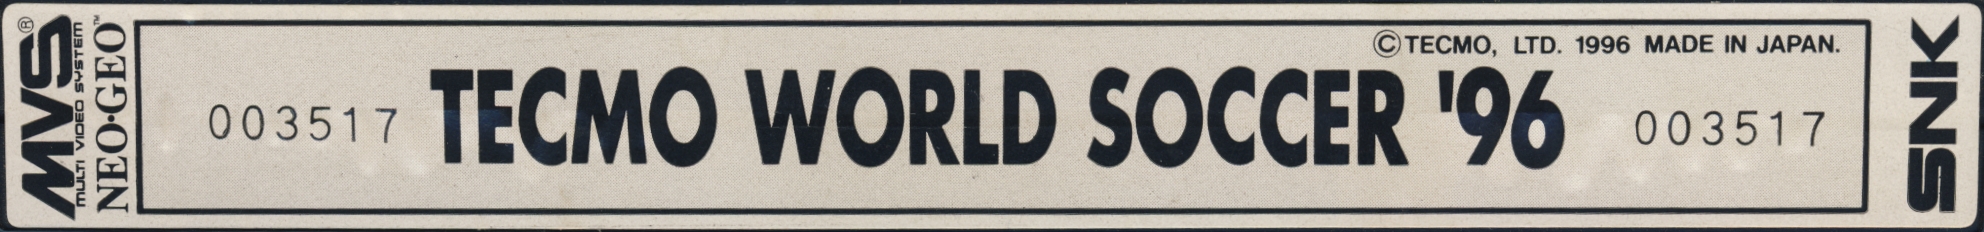 Tecmo world soccer 96 us label.jpg